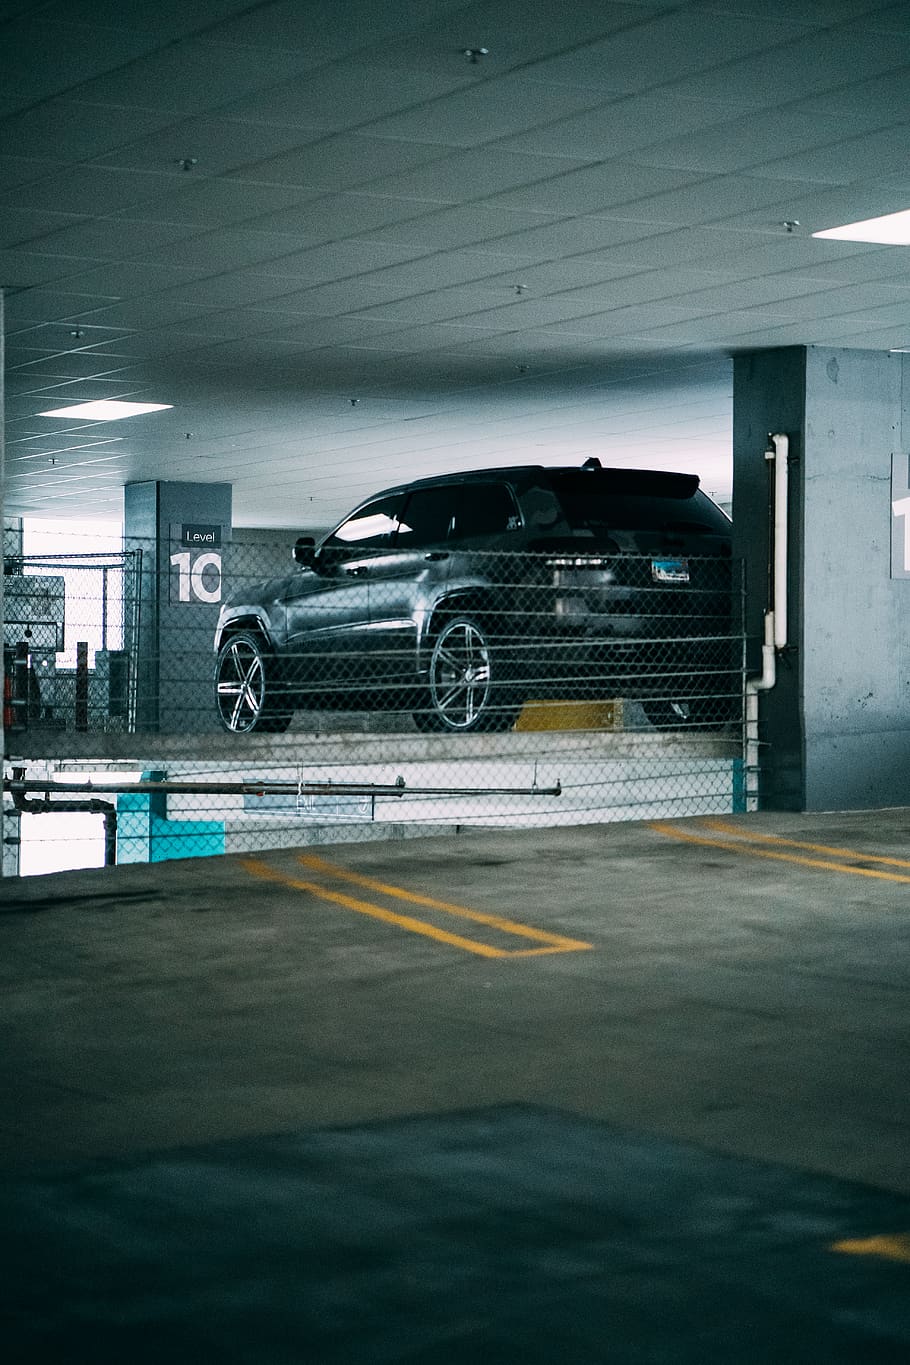 HD wallpaper: Black Car on Garage, building, empty, parked car, parking lot